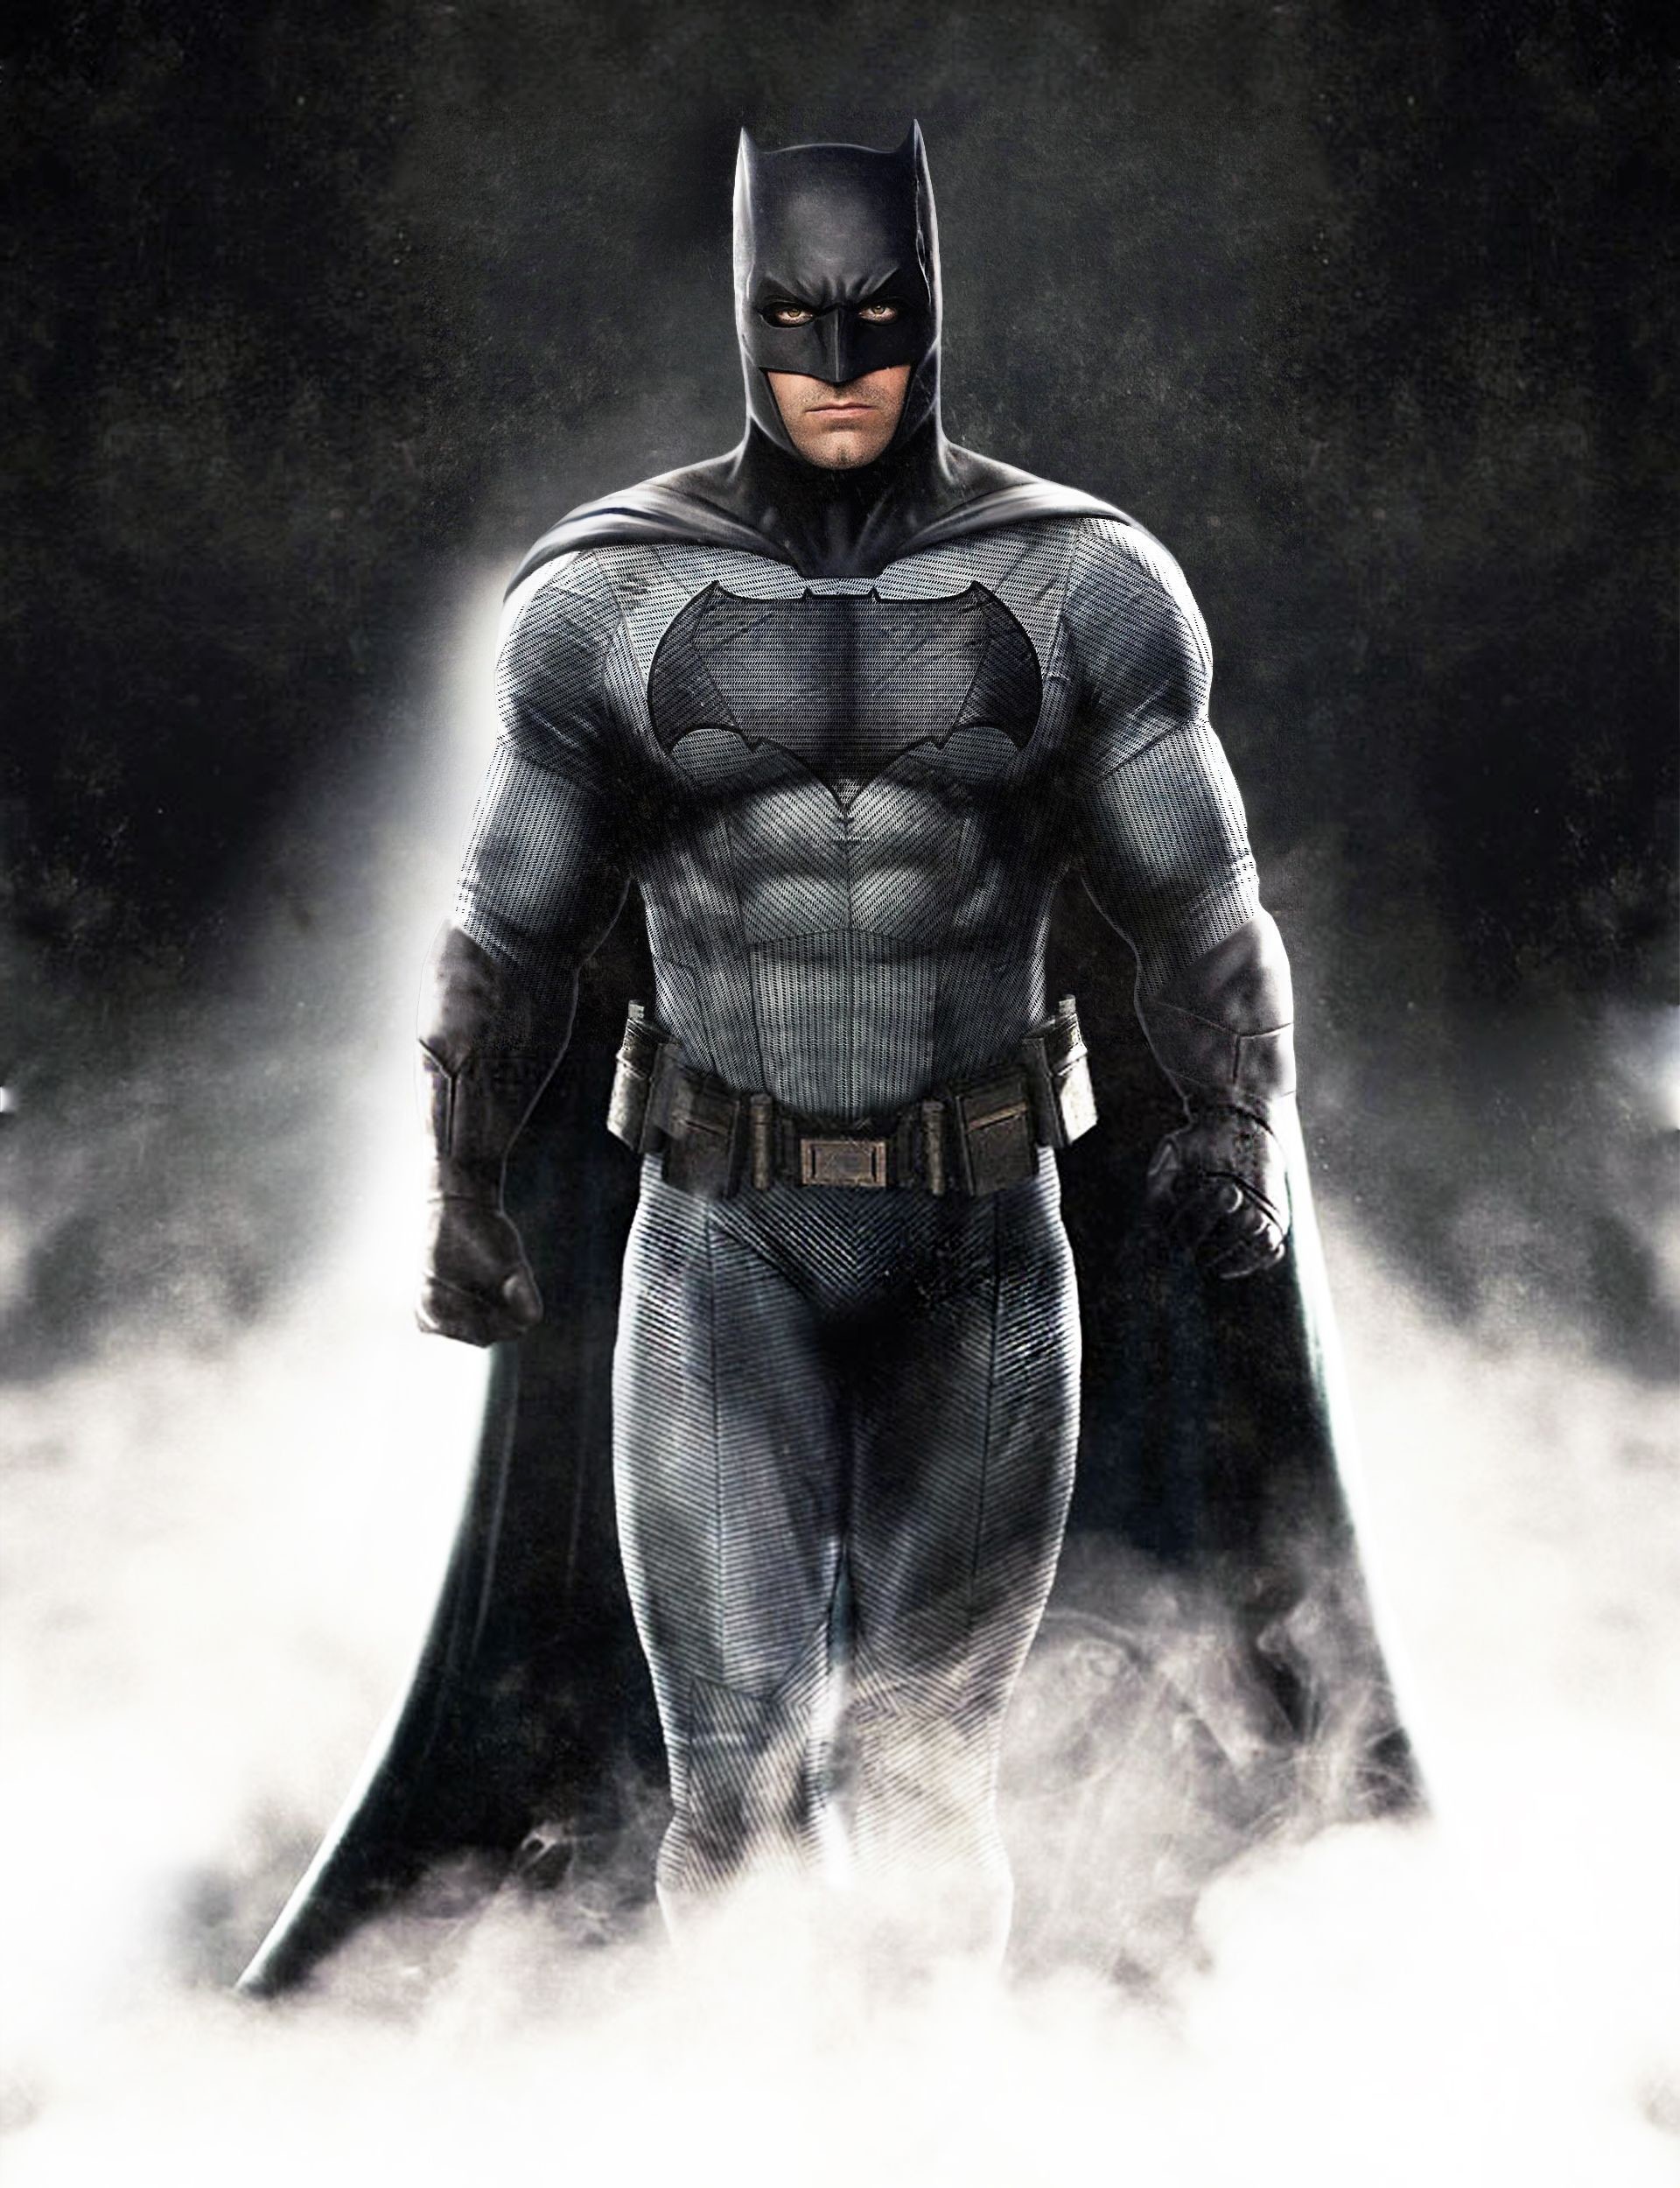 JumpTrailers on X: "The Batman [Wallpaper Celular - Mobile] [4K UHD]  #TheBatman https://t.co/5eagzuBs5U" / X